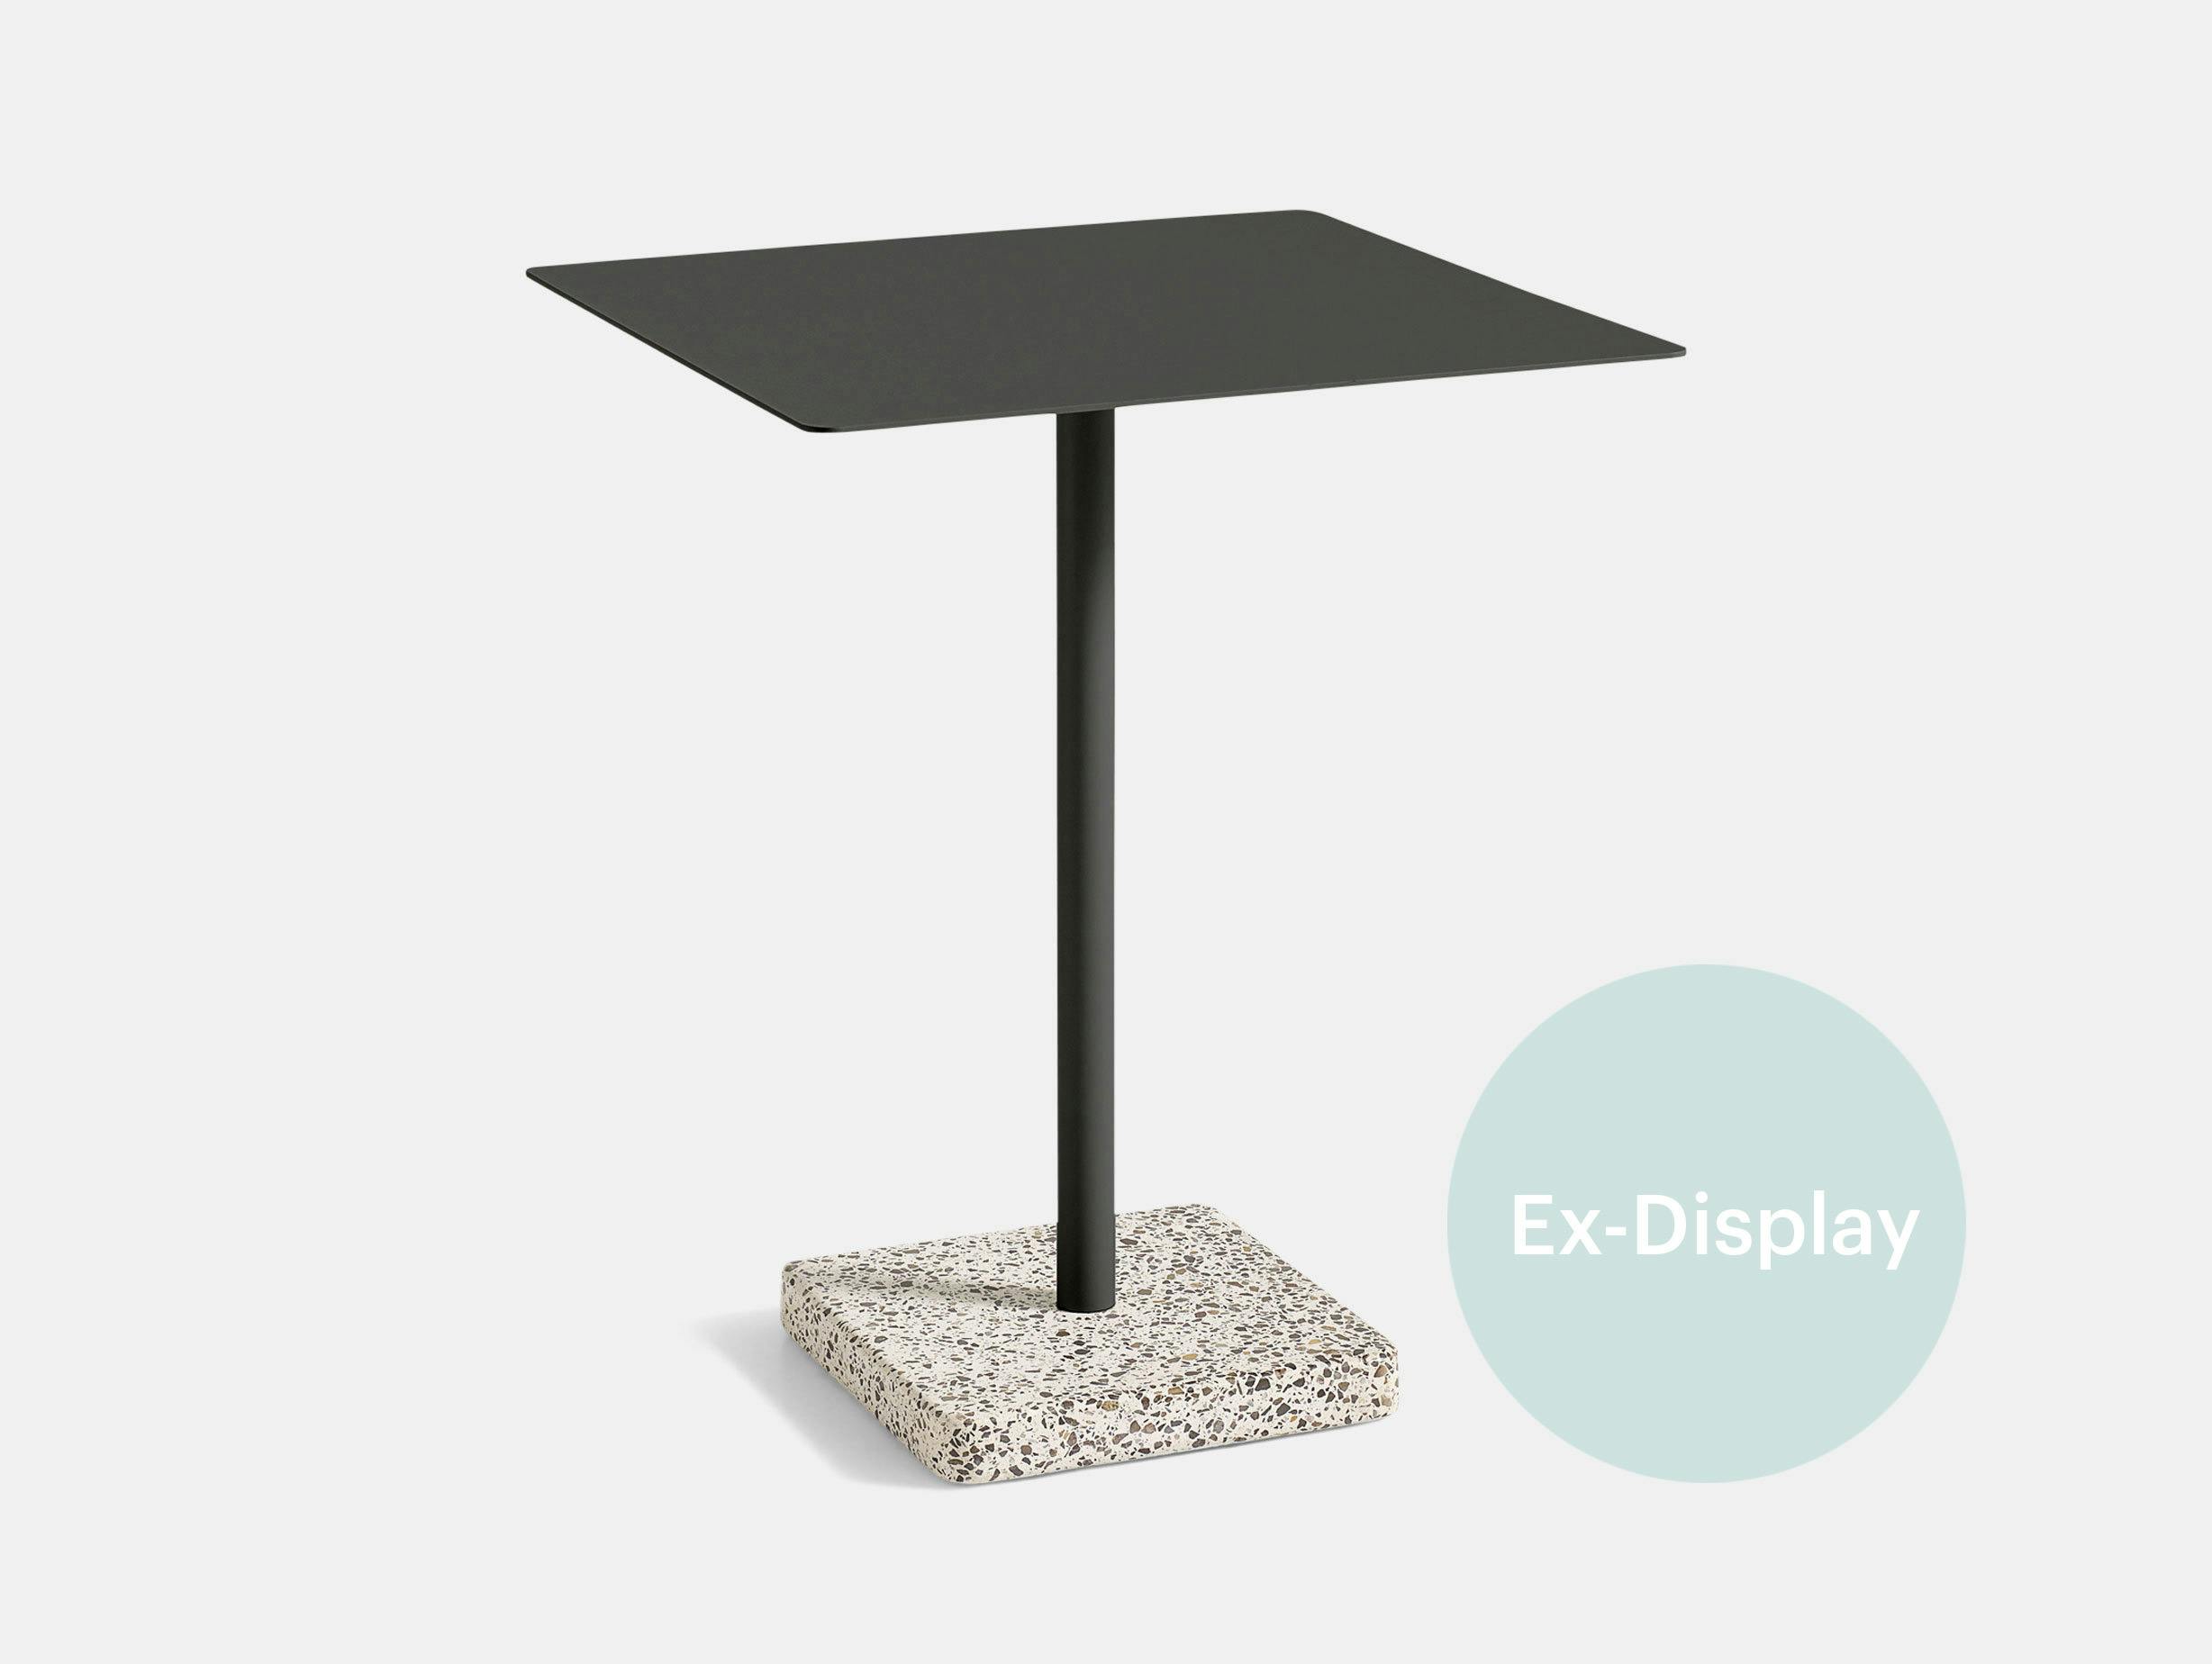 Xdp hay daniel enoksson terrazzo table square anthracite grey